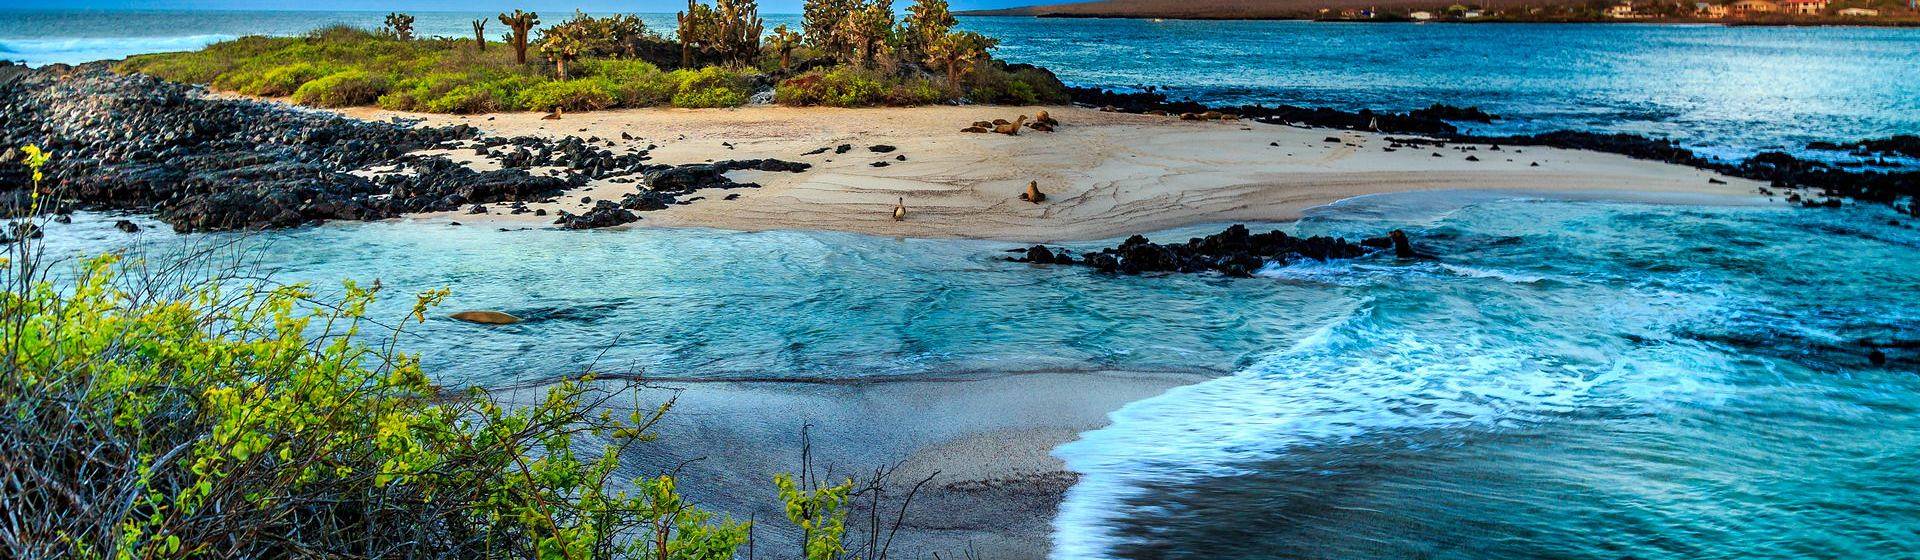 Holidays to Galapagos Islands Image